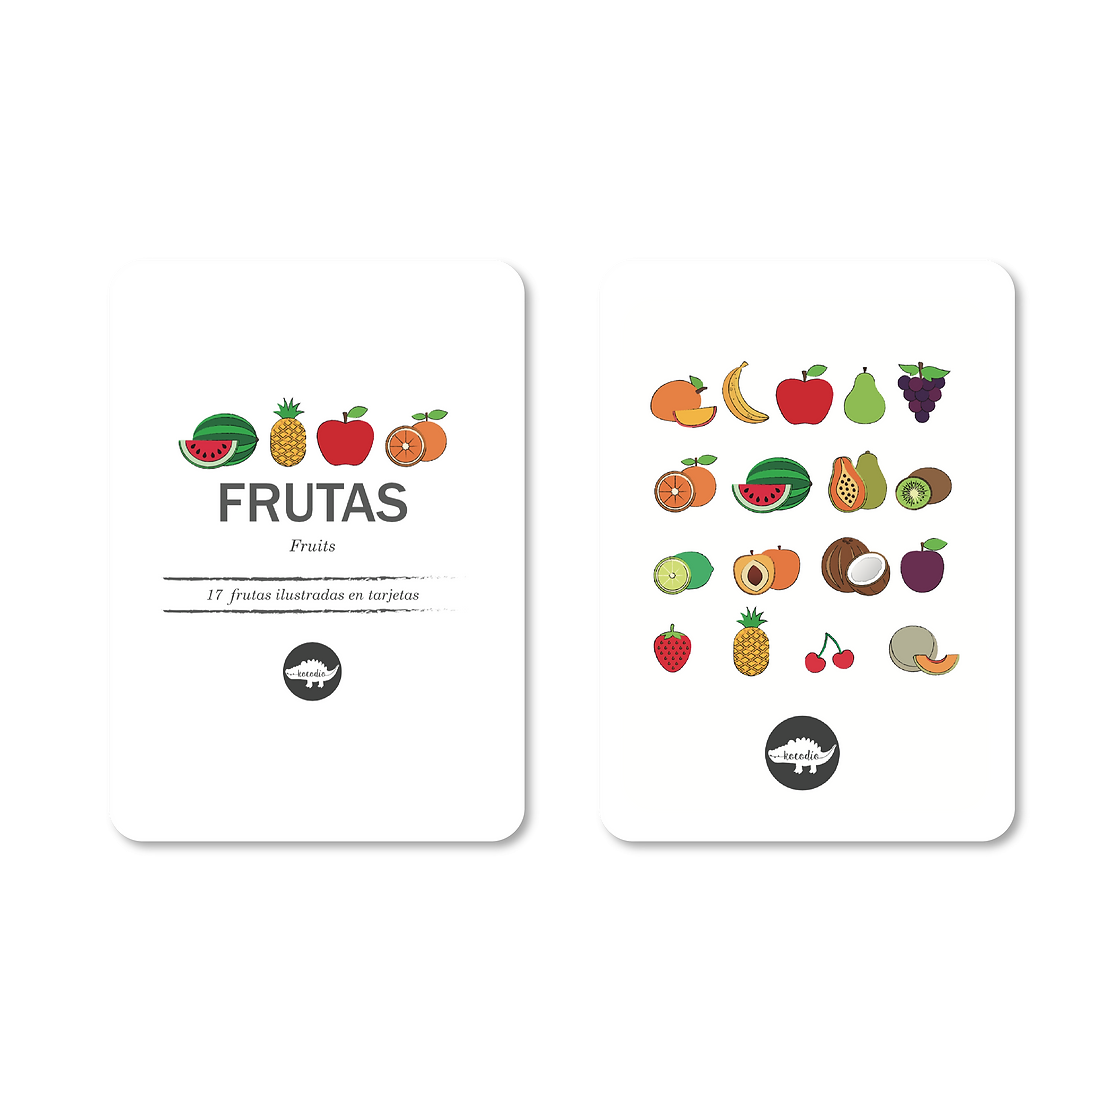 Flash Cards Frutas +12m